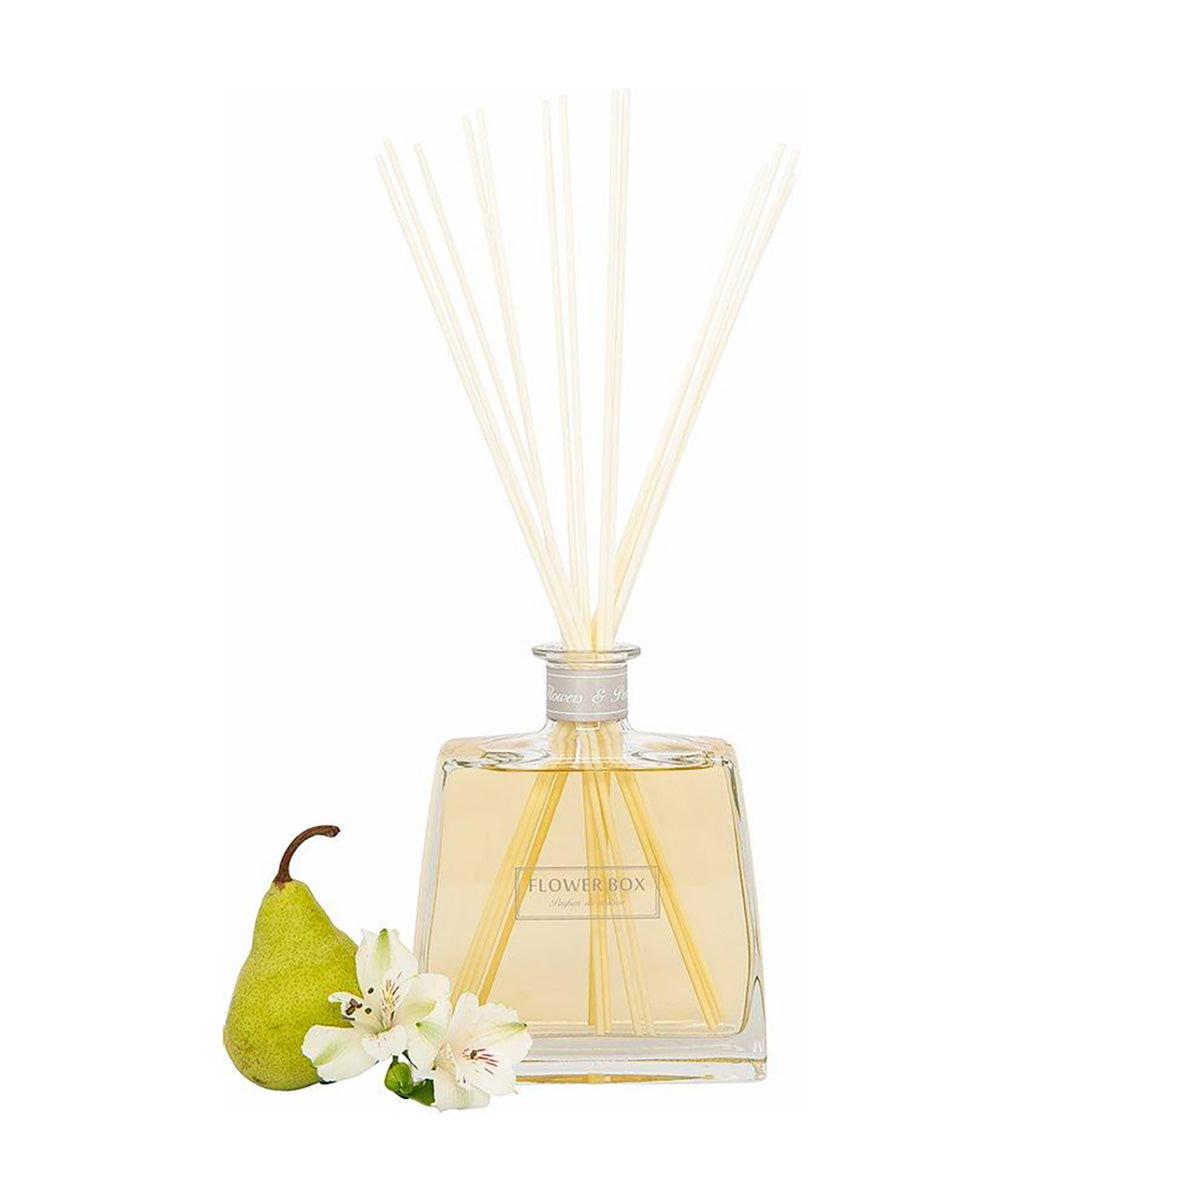 Flowers & Pear Hallmark Diffuser 700mL-Candles & Fragrance-Flower Box-The Bay Room